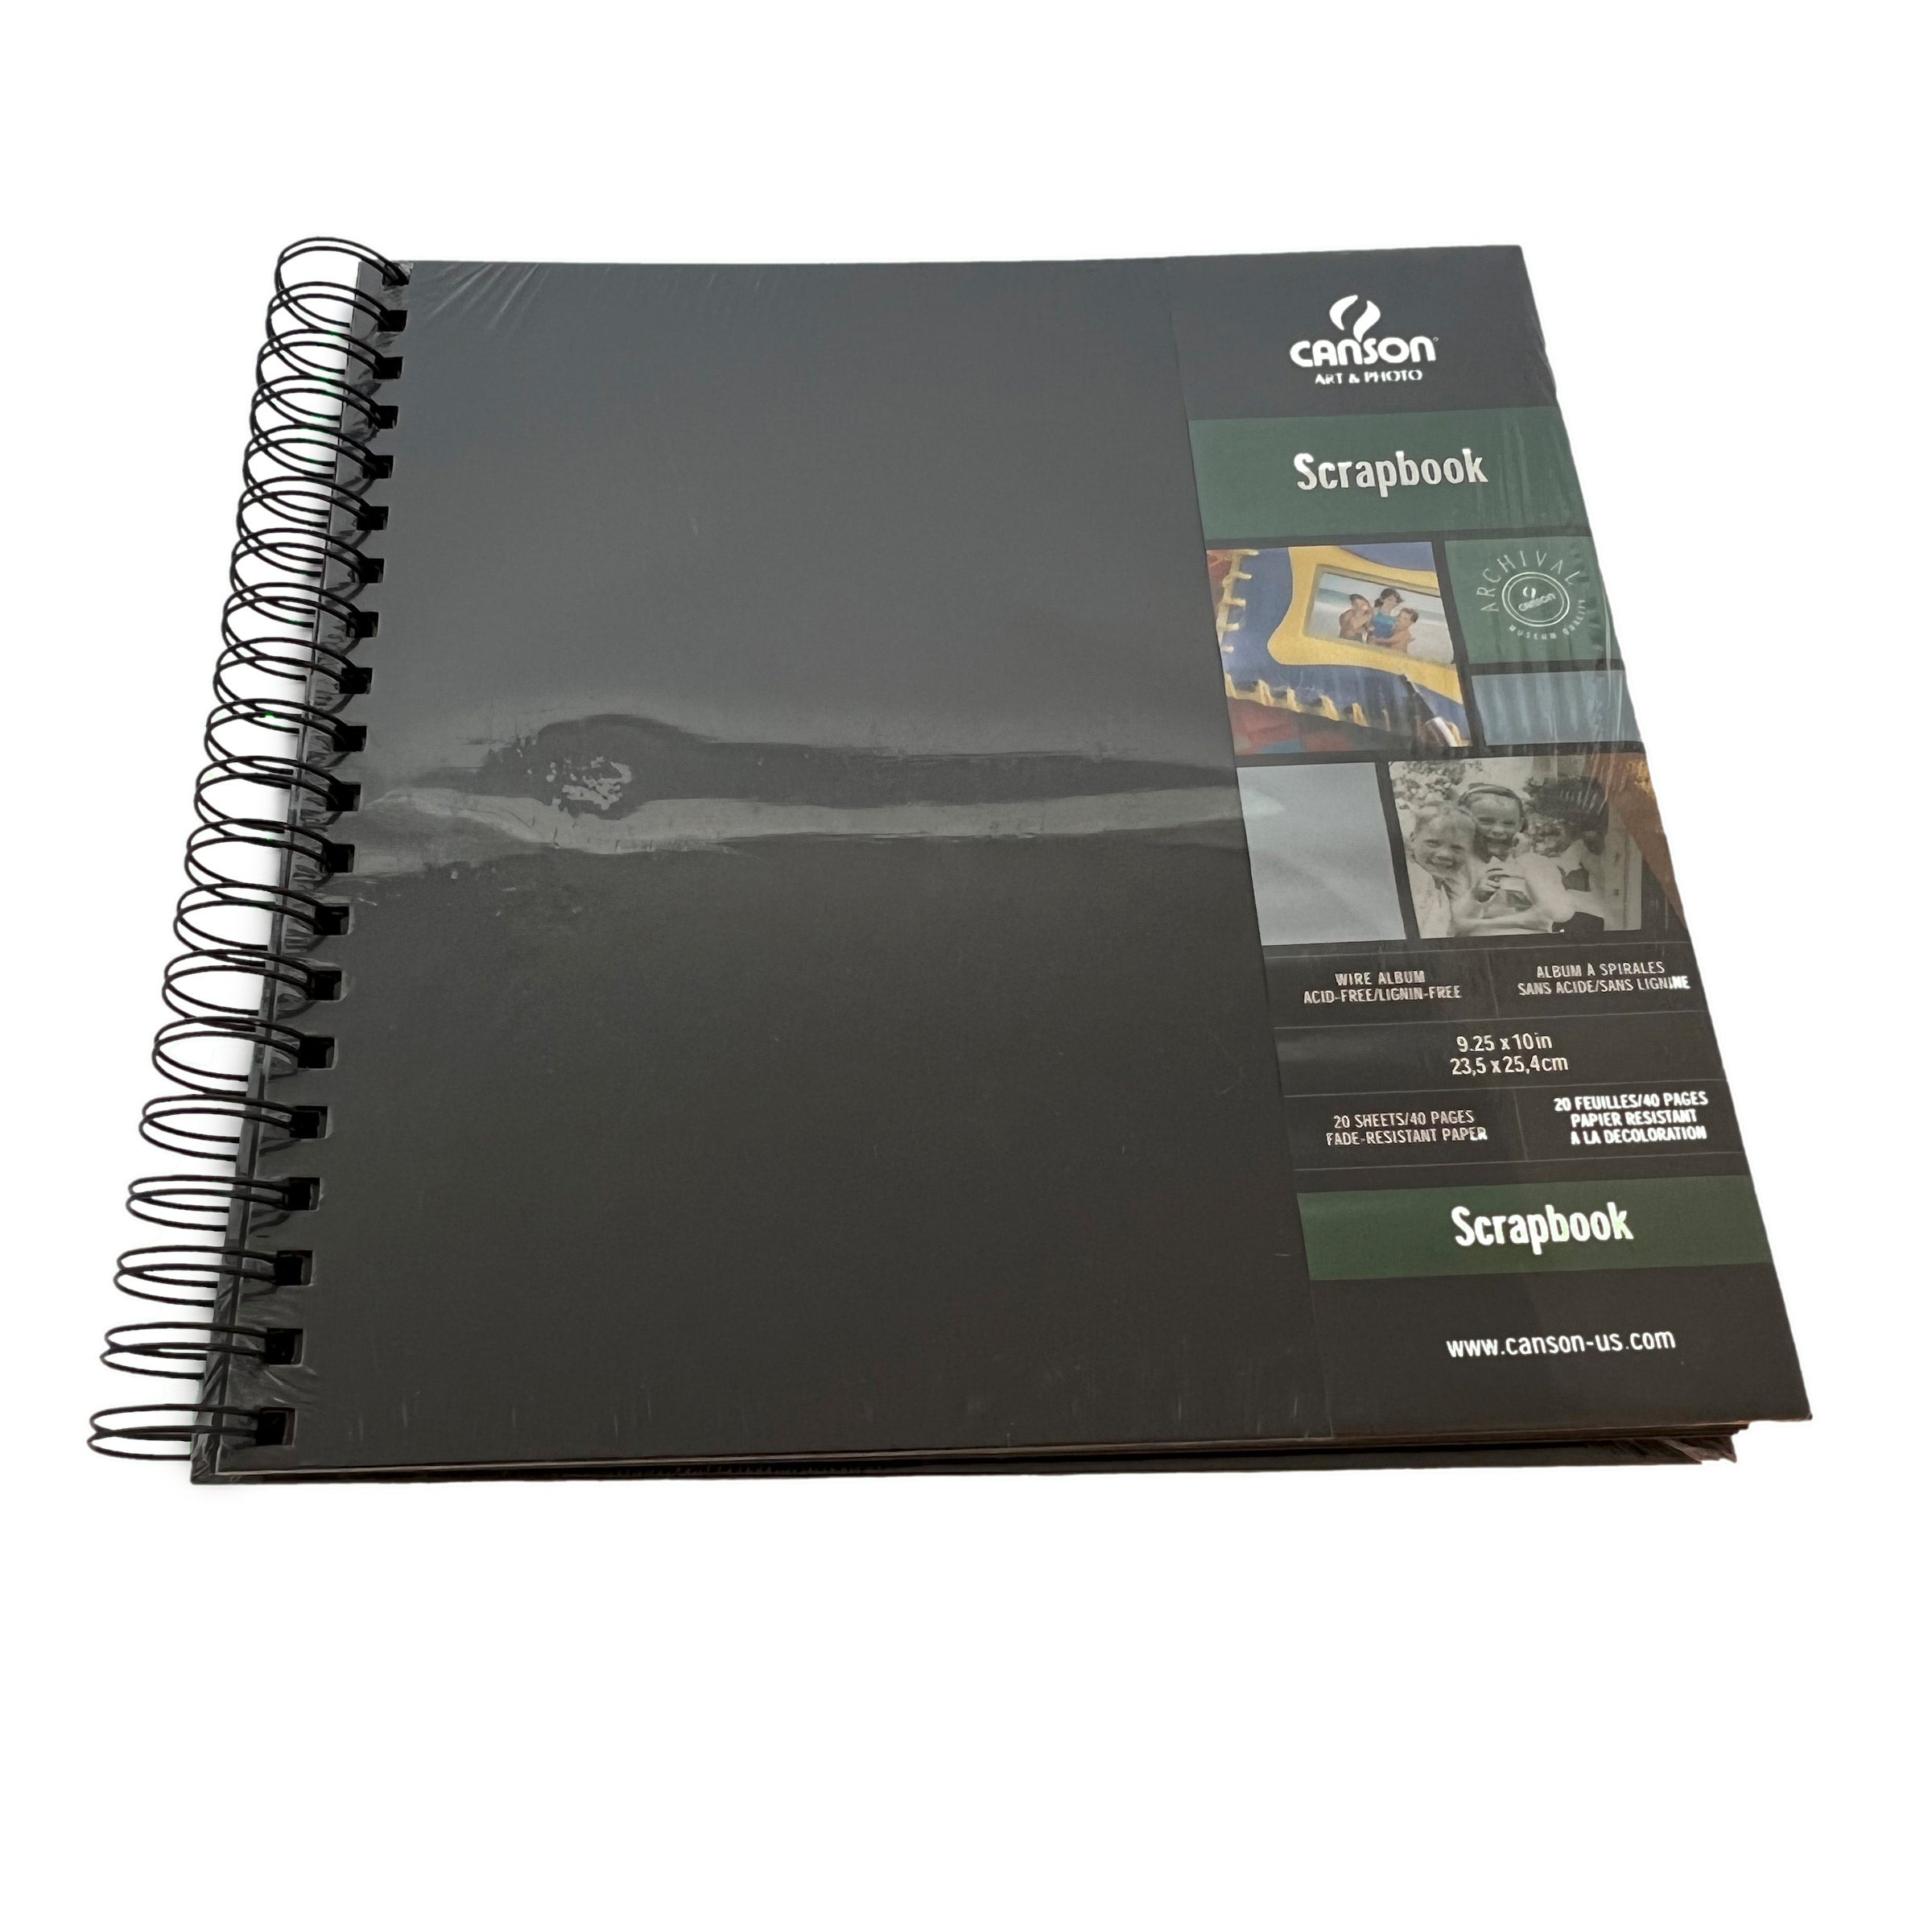 Spiral-bound Canson scrapbook | Creative Reuse Online Store